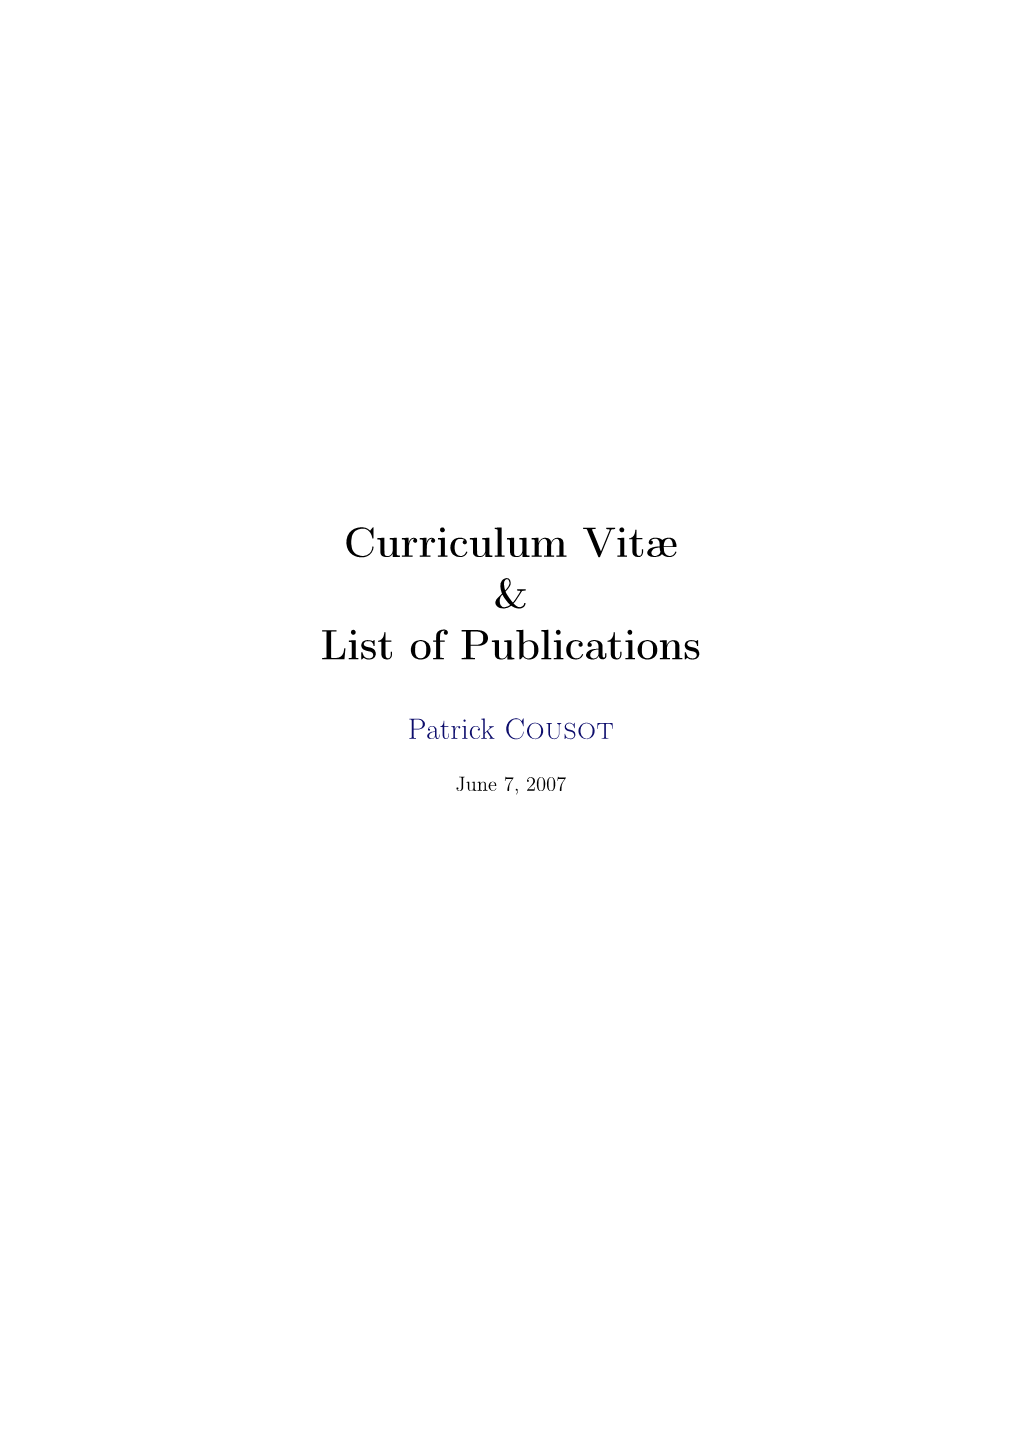 Curriculum Vitæ & List of Publications